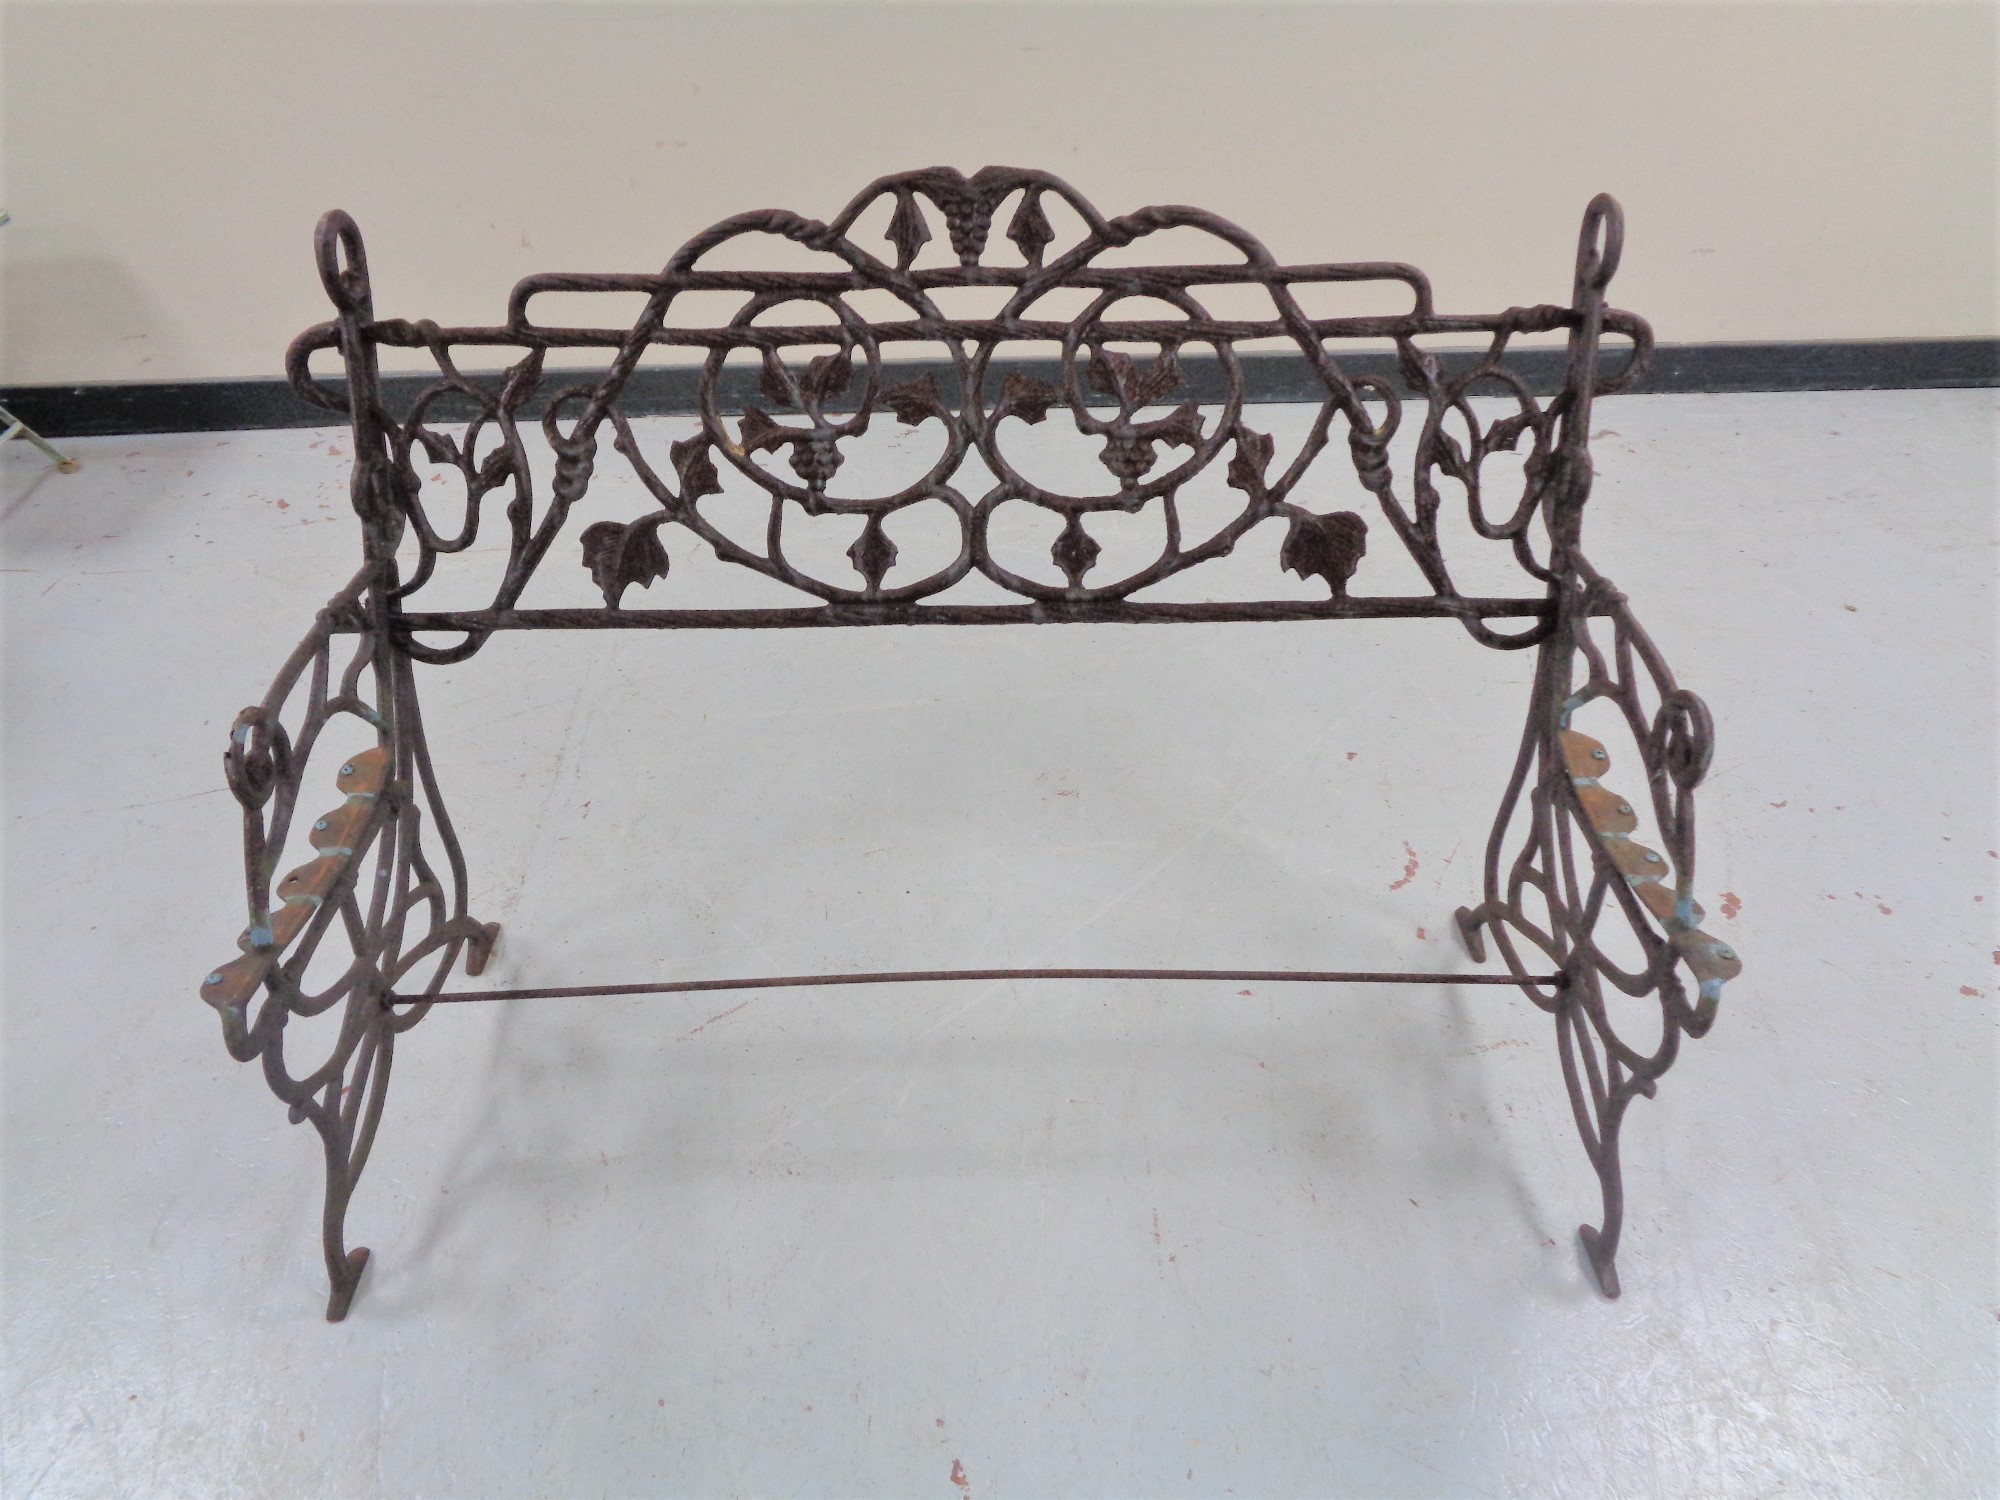 A cast iron bench frame.